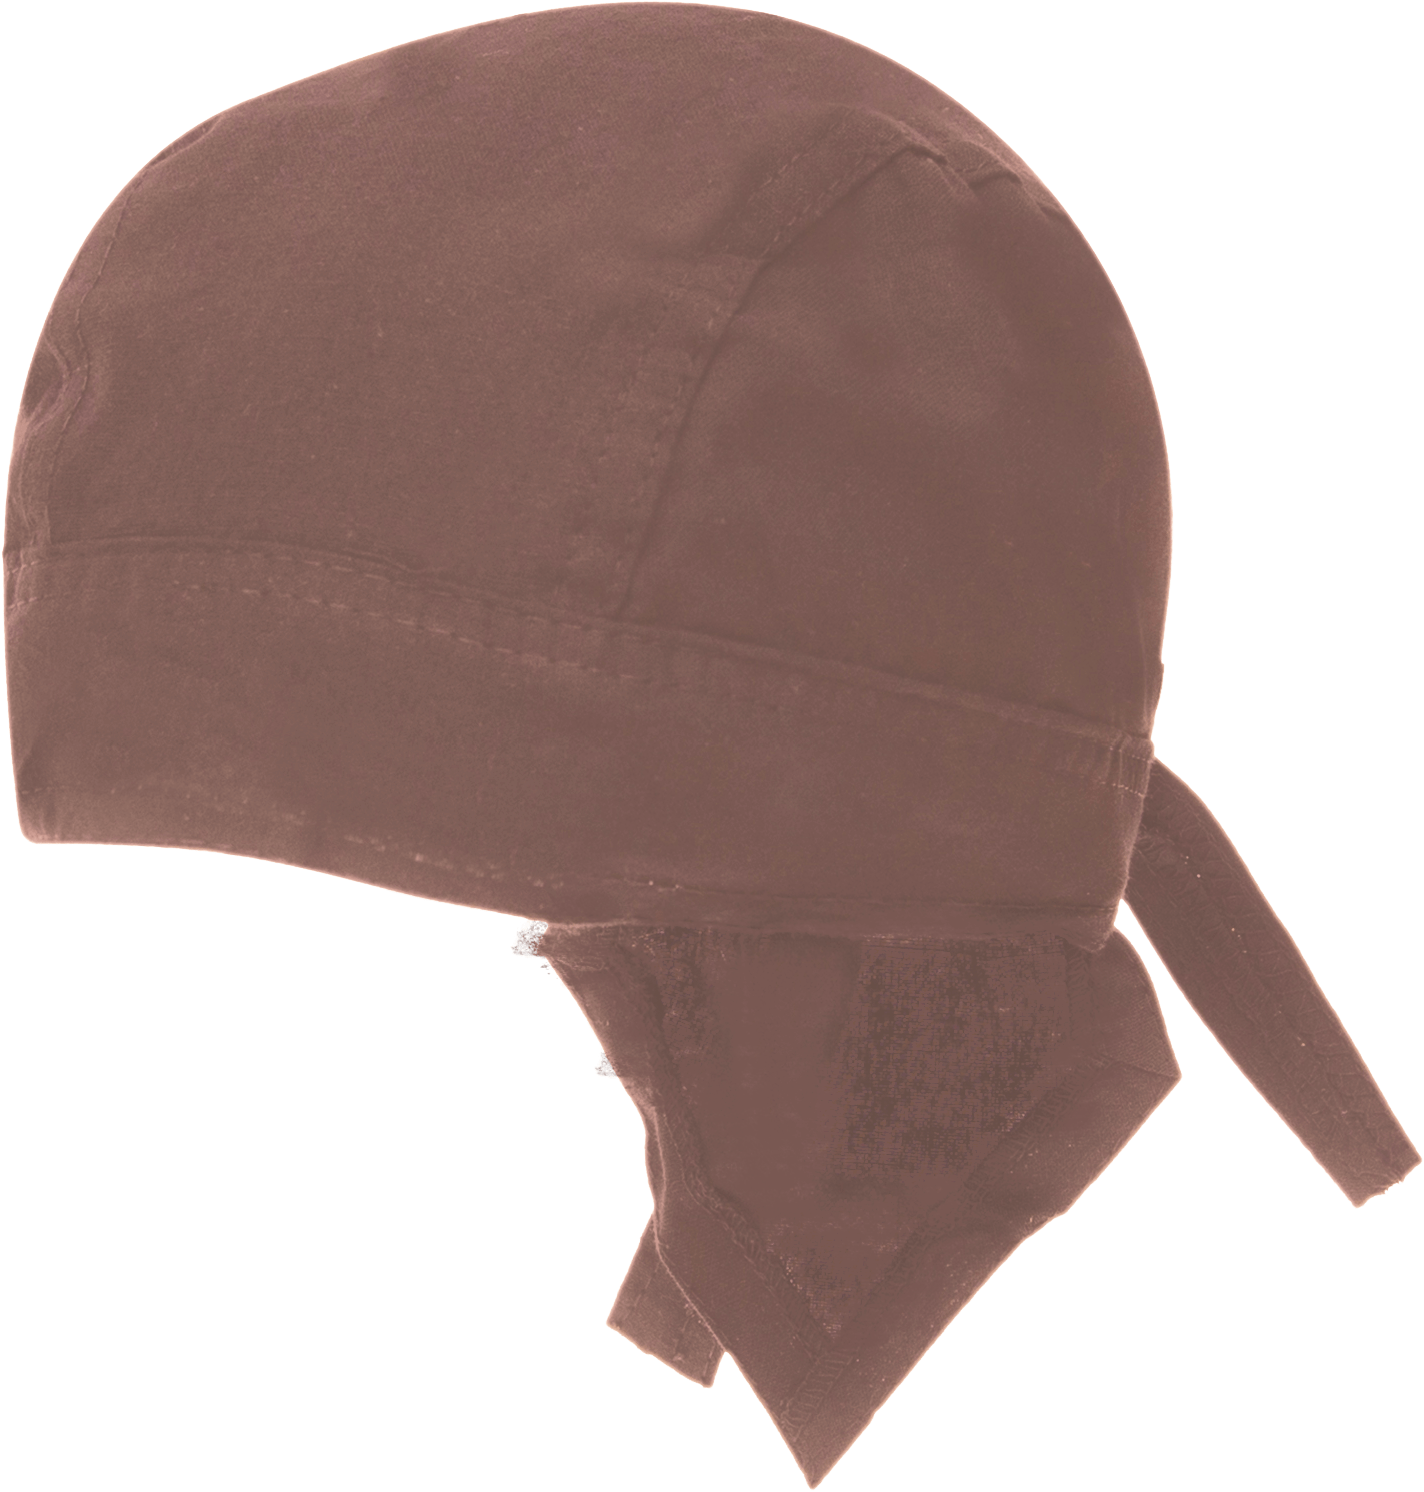 Brown Solid Color Head Wrap - 100% Cotton - Imported - Brown, 1 piece